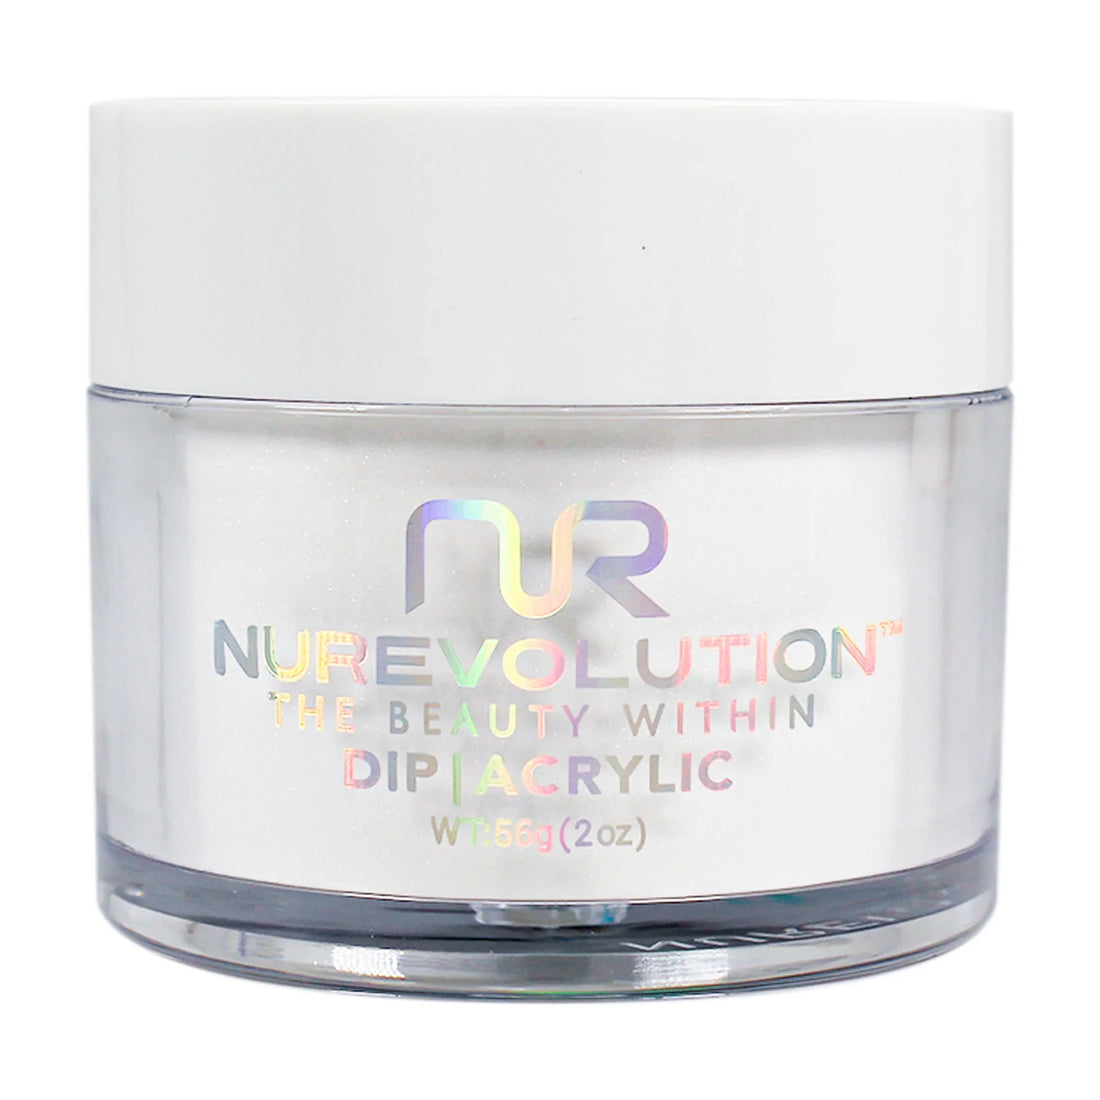 NuRevolution Trio Dip/Acrylic Powder 202 Glass Slipper